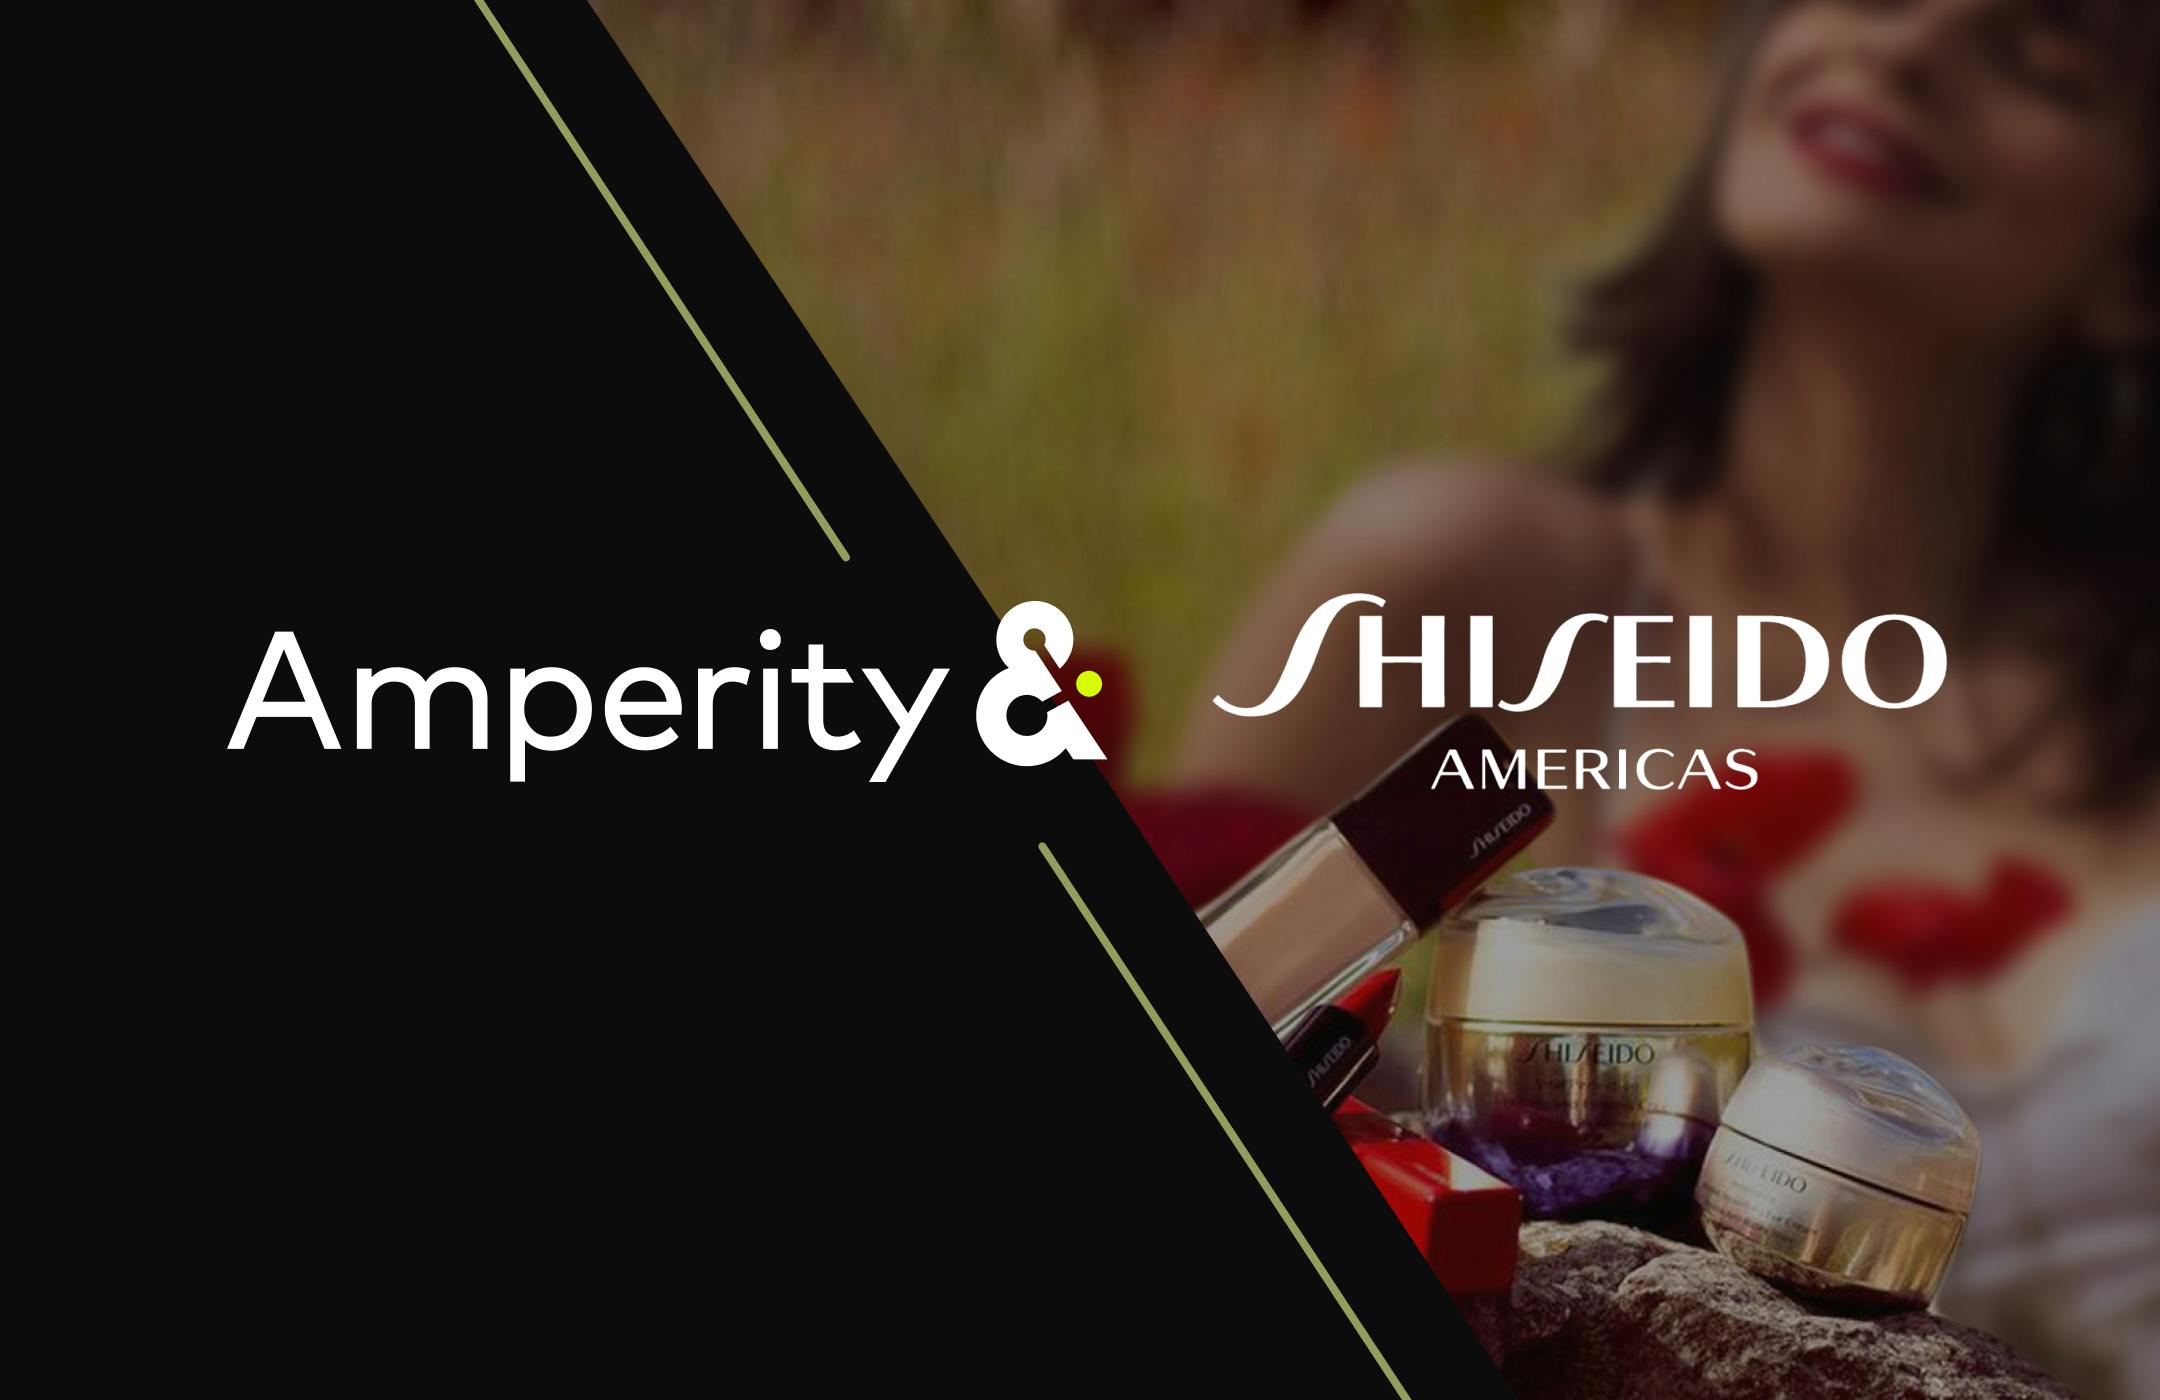 Amperity & Shiseido Americas